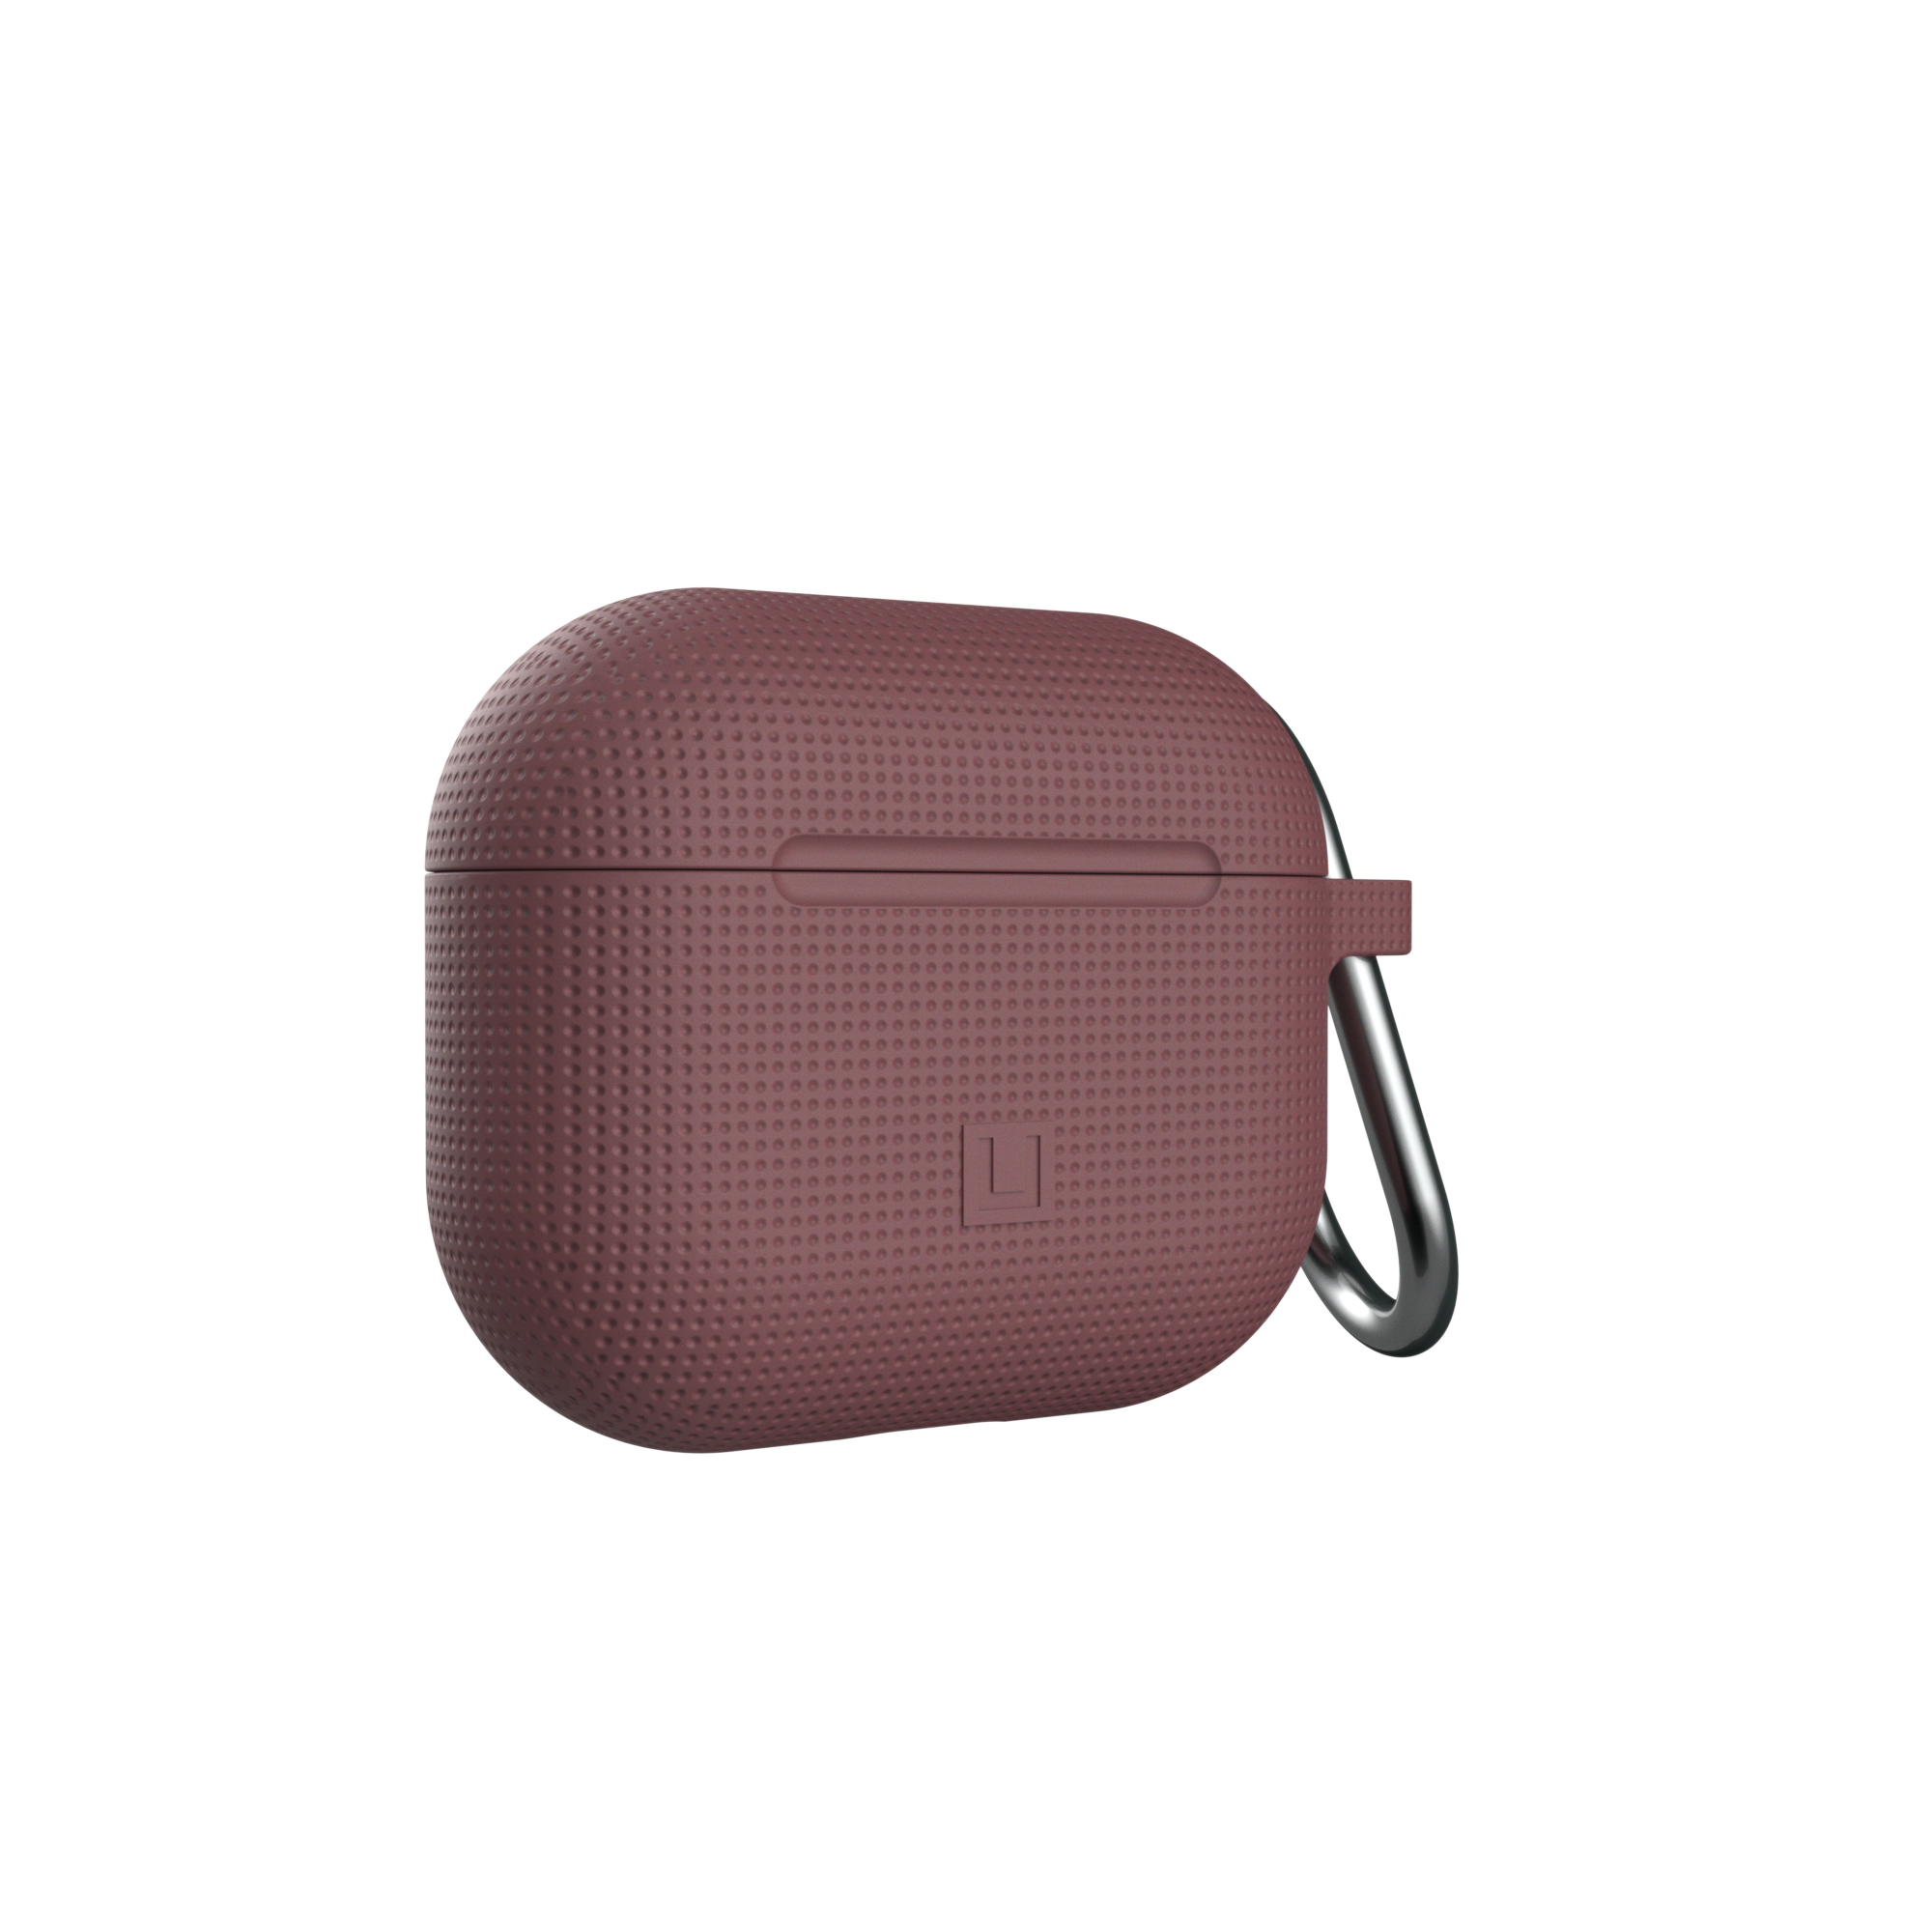 2021), GEAR U ARMOR by Dot (3. Generation Silikon Cover, [U] AirPods aubergine Flip Case, Apple, URBAN UAG